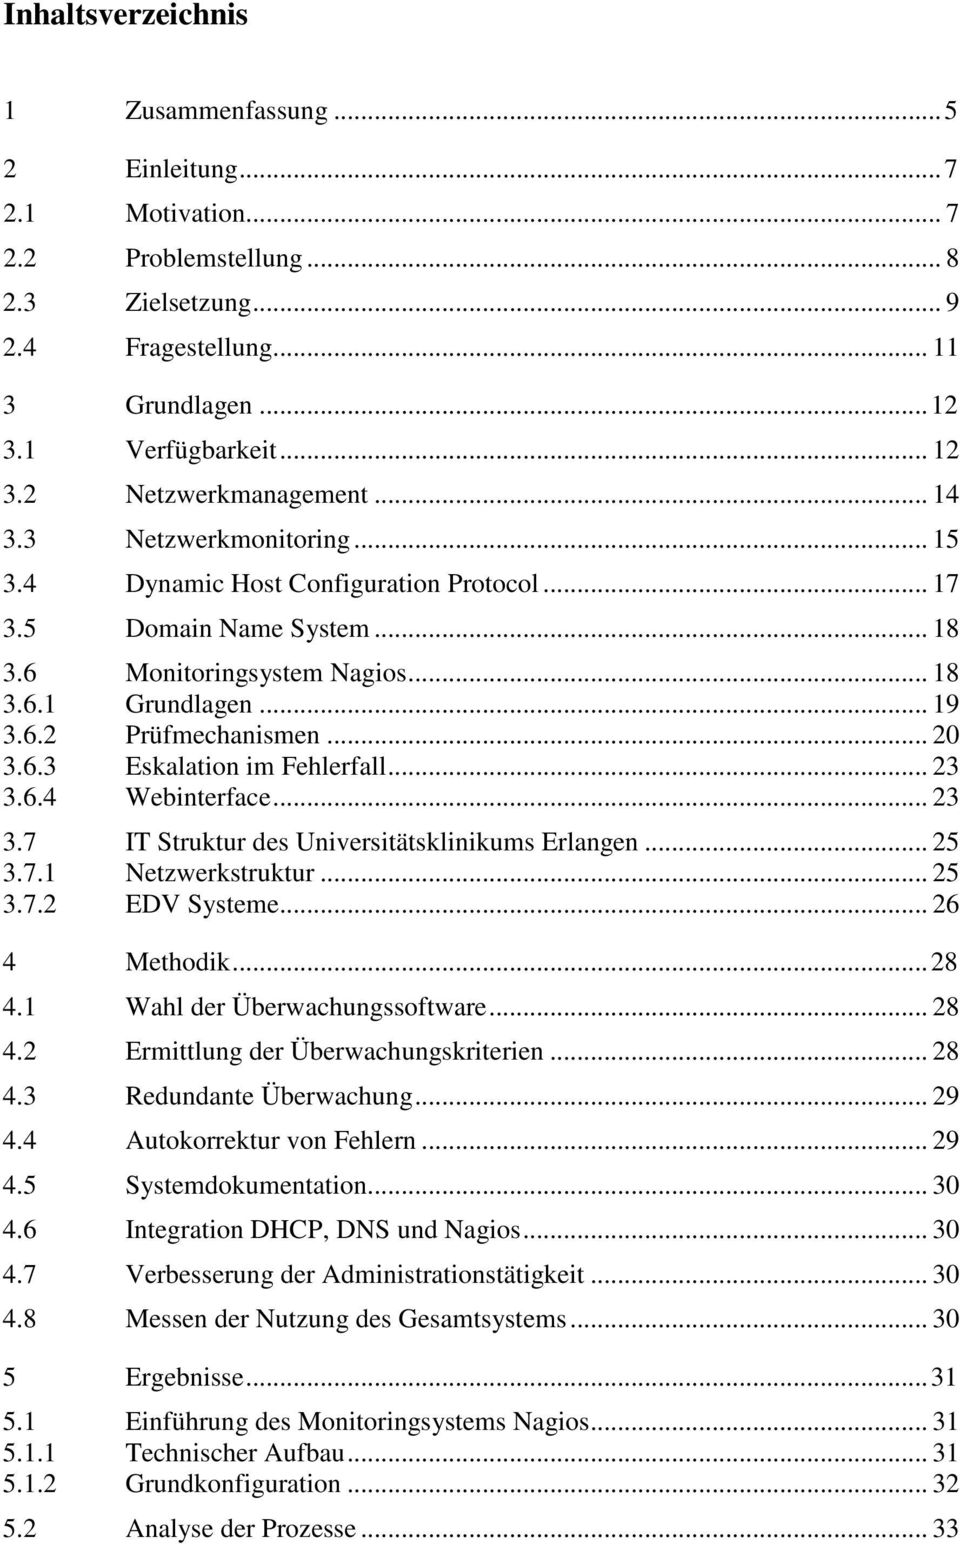 .. 20 3.6.3 Eskalation im Fehlerfall... 23 3.6.4 Webinterface... 23 3.7 IT Struktur des Universitätsklinikums Erlangen... 25 3.7.1 Netzwerkstruktur... 25 3.7.2 EDV Systeme... 26 4 Methodik...28 4.